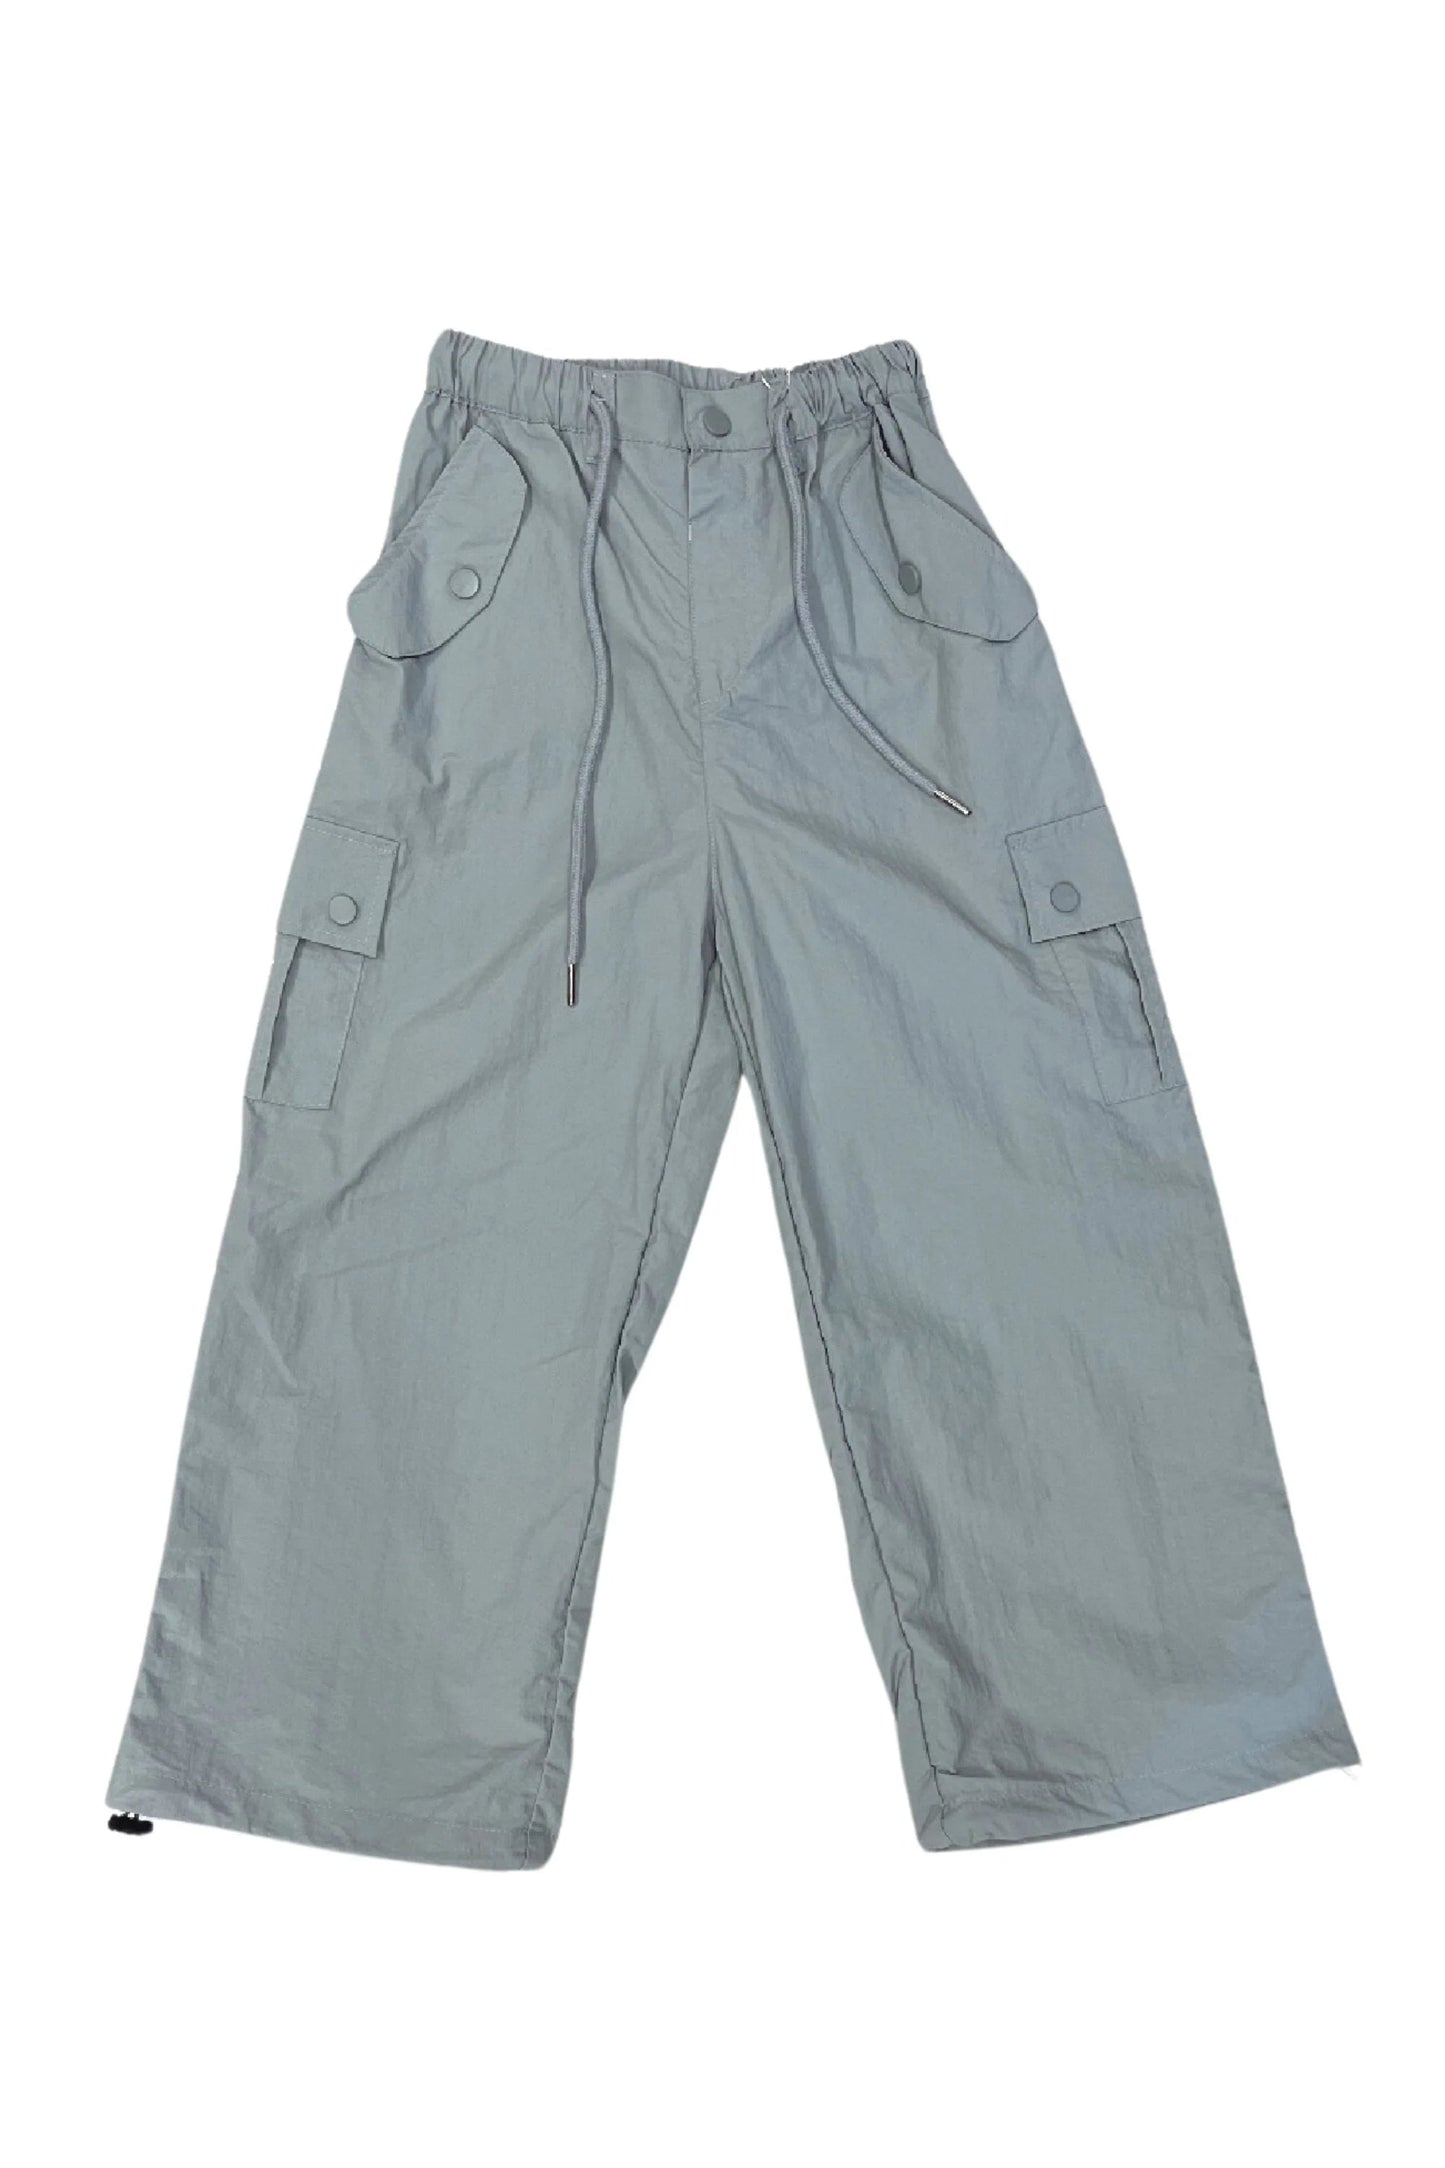 Grey Parachute Cargo Pants 160 GIRLS APPAREL TWEEN 7-16 Tractr 7 